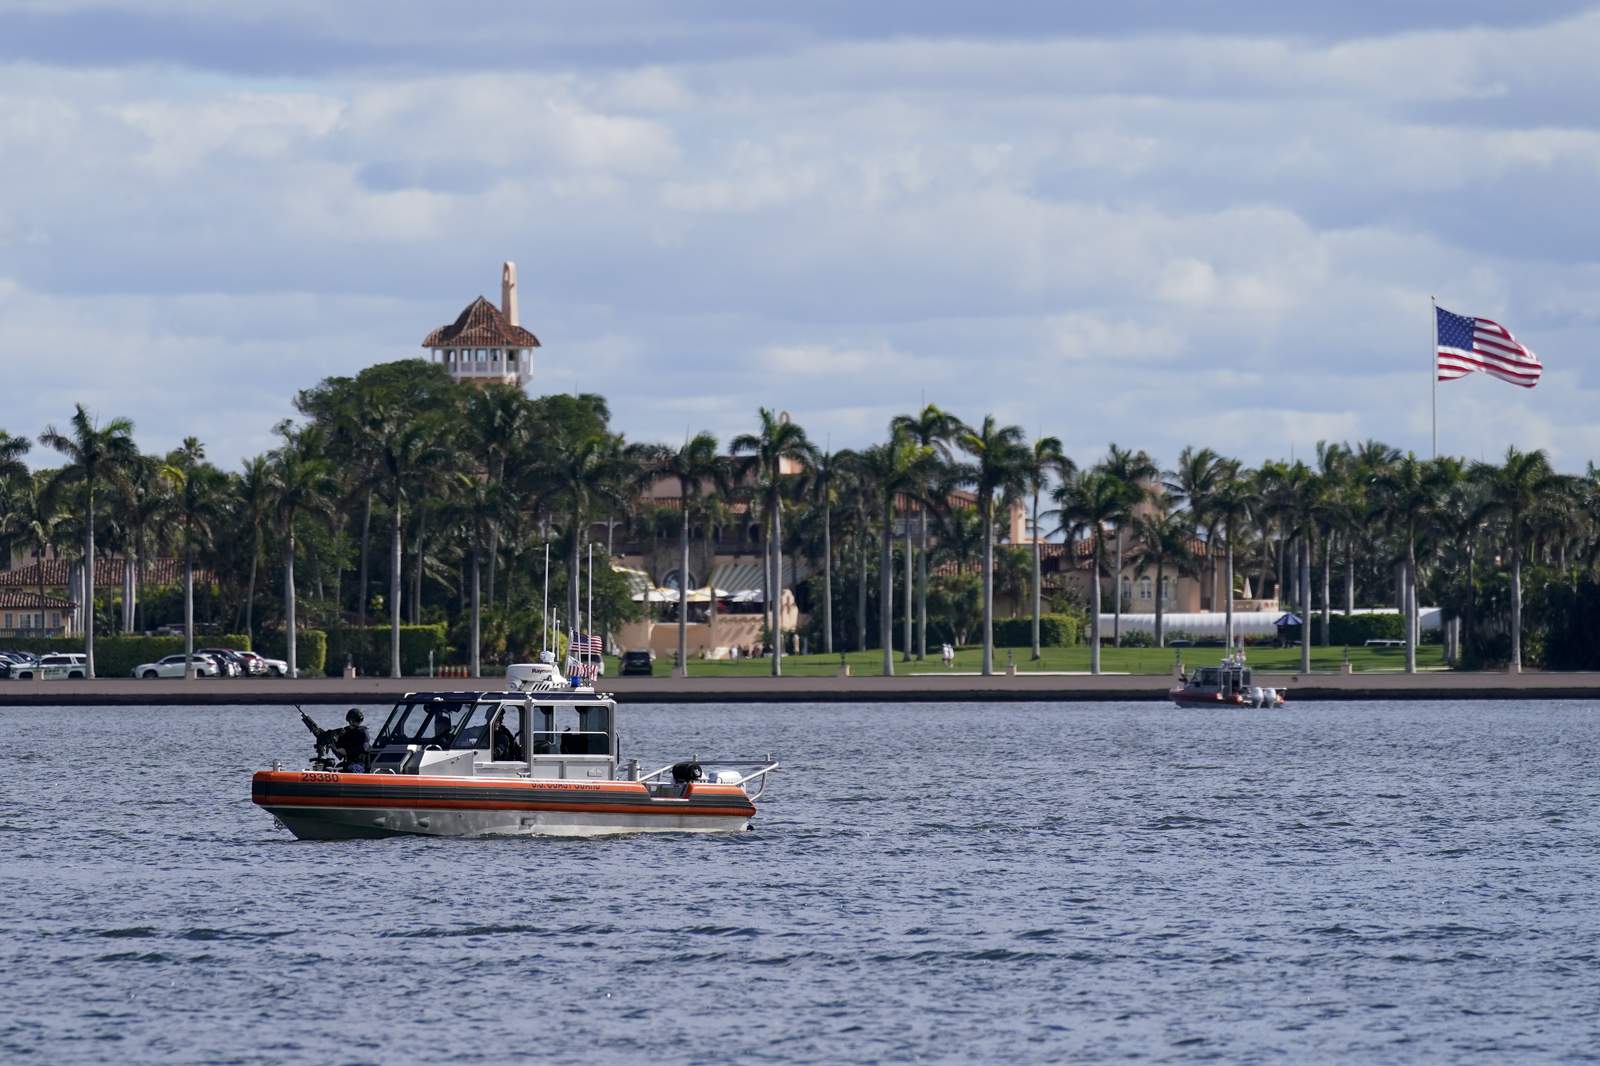 Palm Beach considers options as Trump remains at Mar-a-Lago